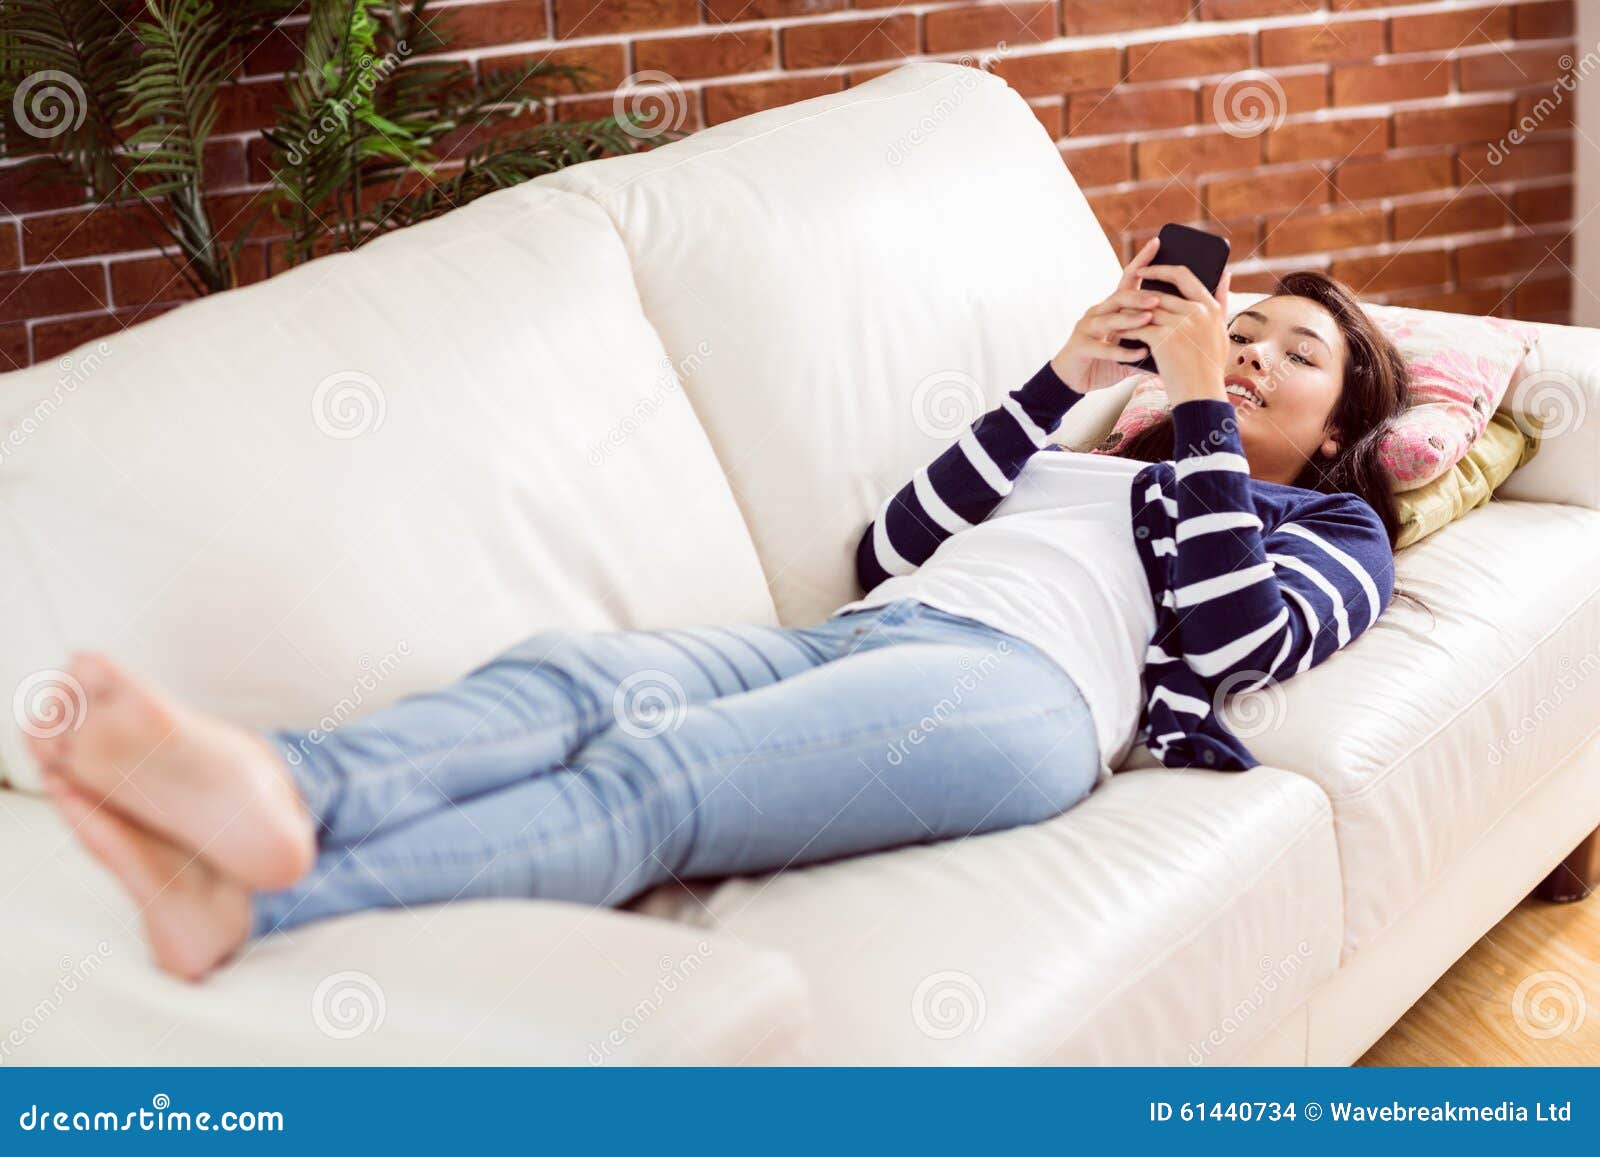 Лежали или лижали. Телефон лежит на диване. Девушка лежит на диване. Женская фотосессия на диване с телефоном. Человек лежит на диване.